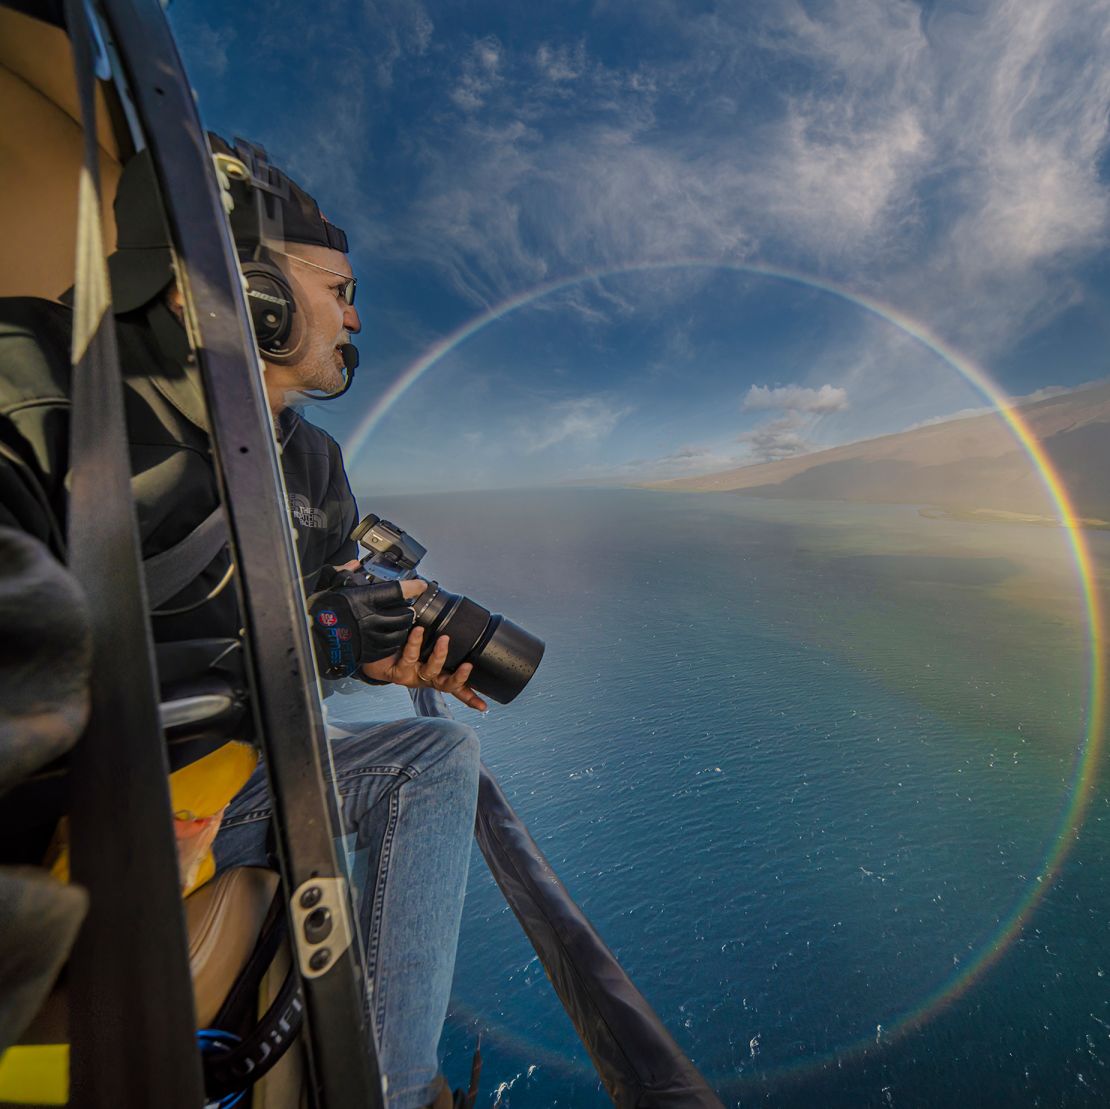 On a trip flying 3,200 feet over Molokai, Hawaii, Delson was captured inside a rare double circular rainbow.